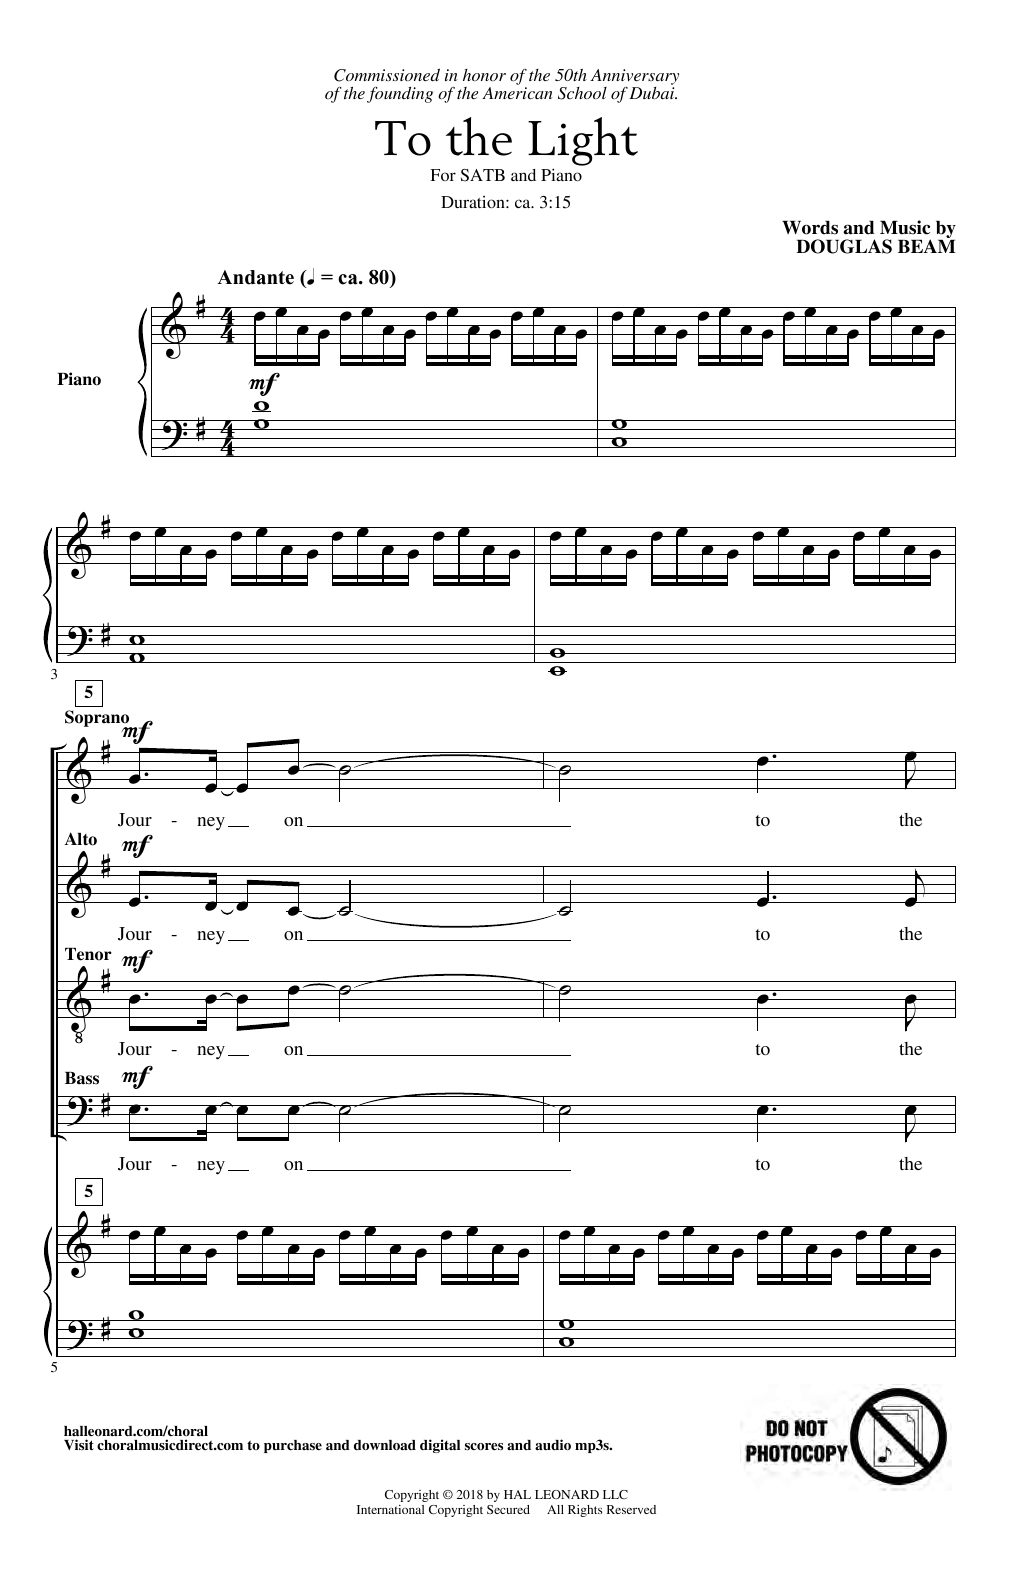 To The Light (SATB Choir) von Douglas Beam